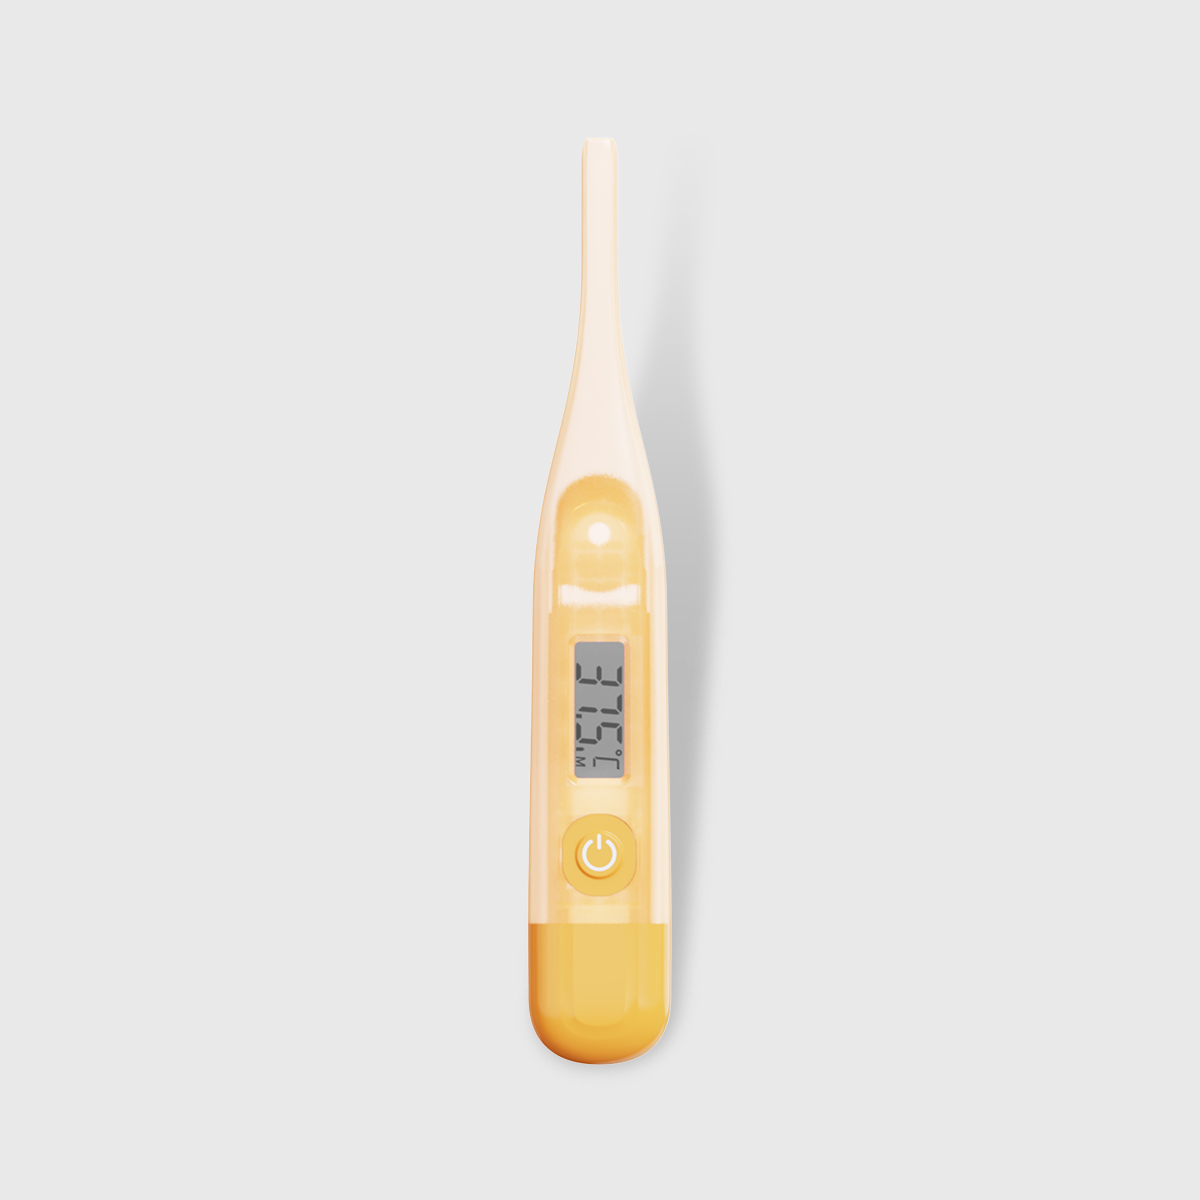 CE MDR Approved Thermometer Transparent Digital Xitsundzuxo xo tiya xa Thermometer ya ku hisa ka miri